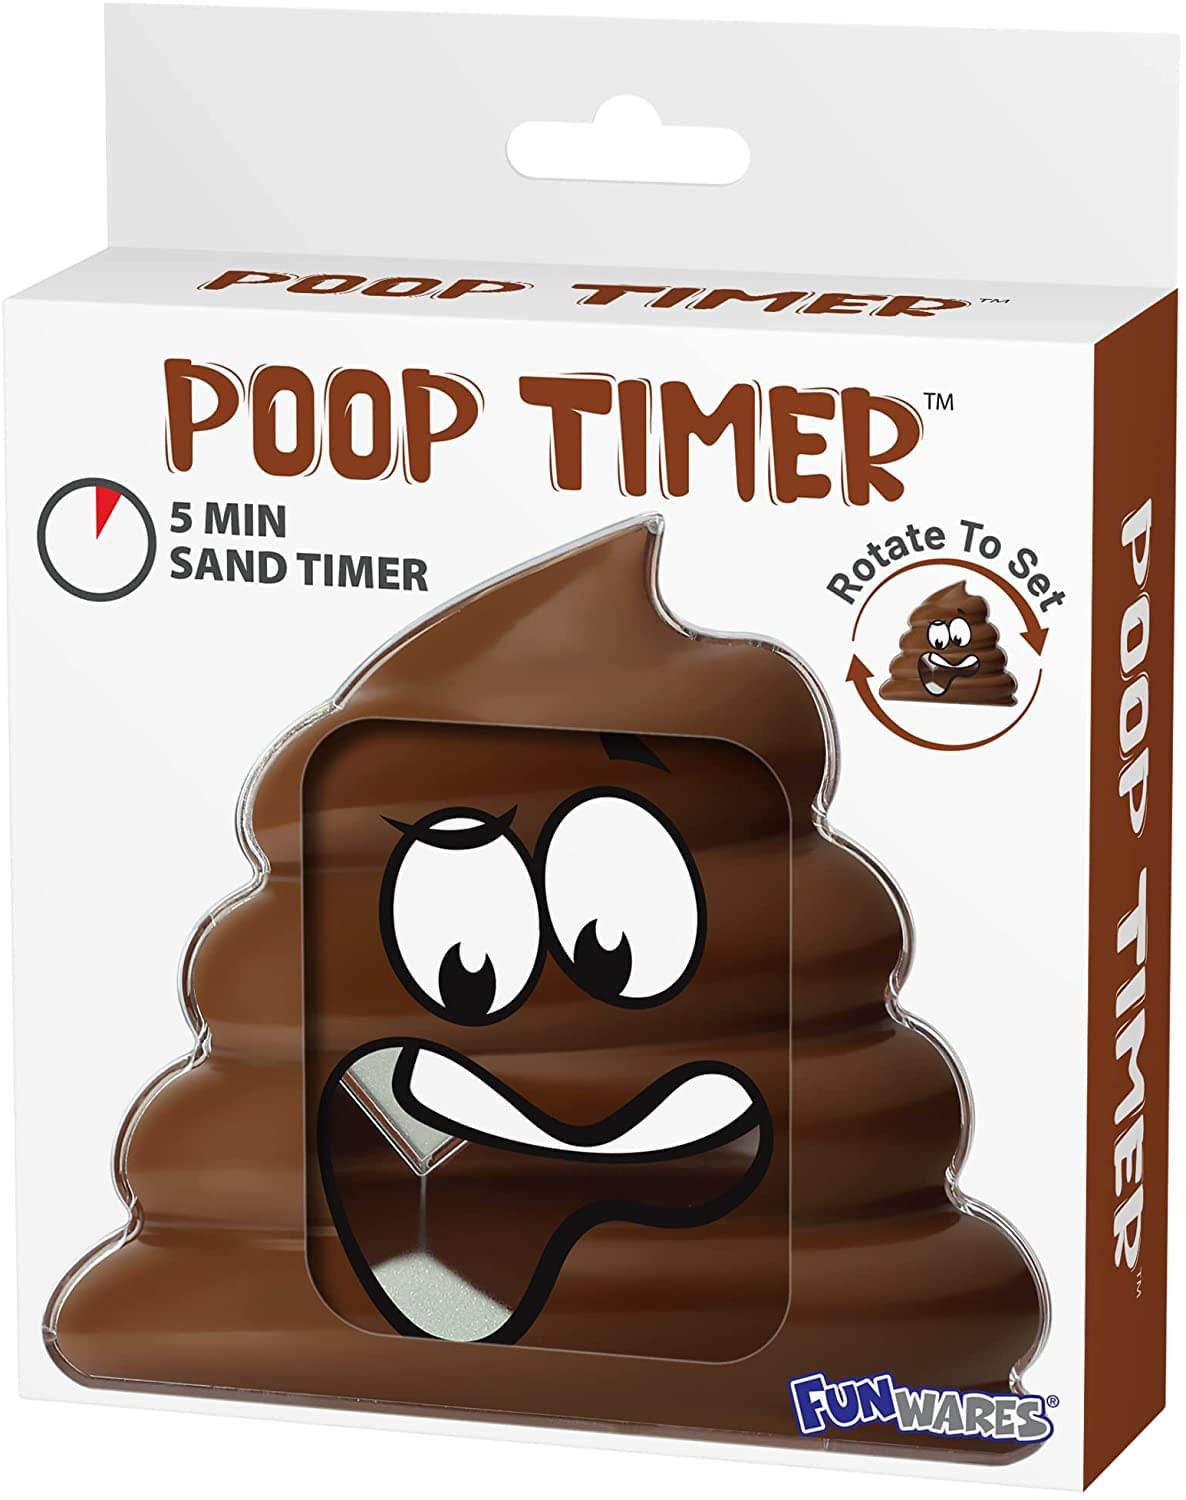 Poop Emoji 5 Minute Sand Timer | Hilarious Gag Gift